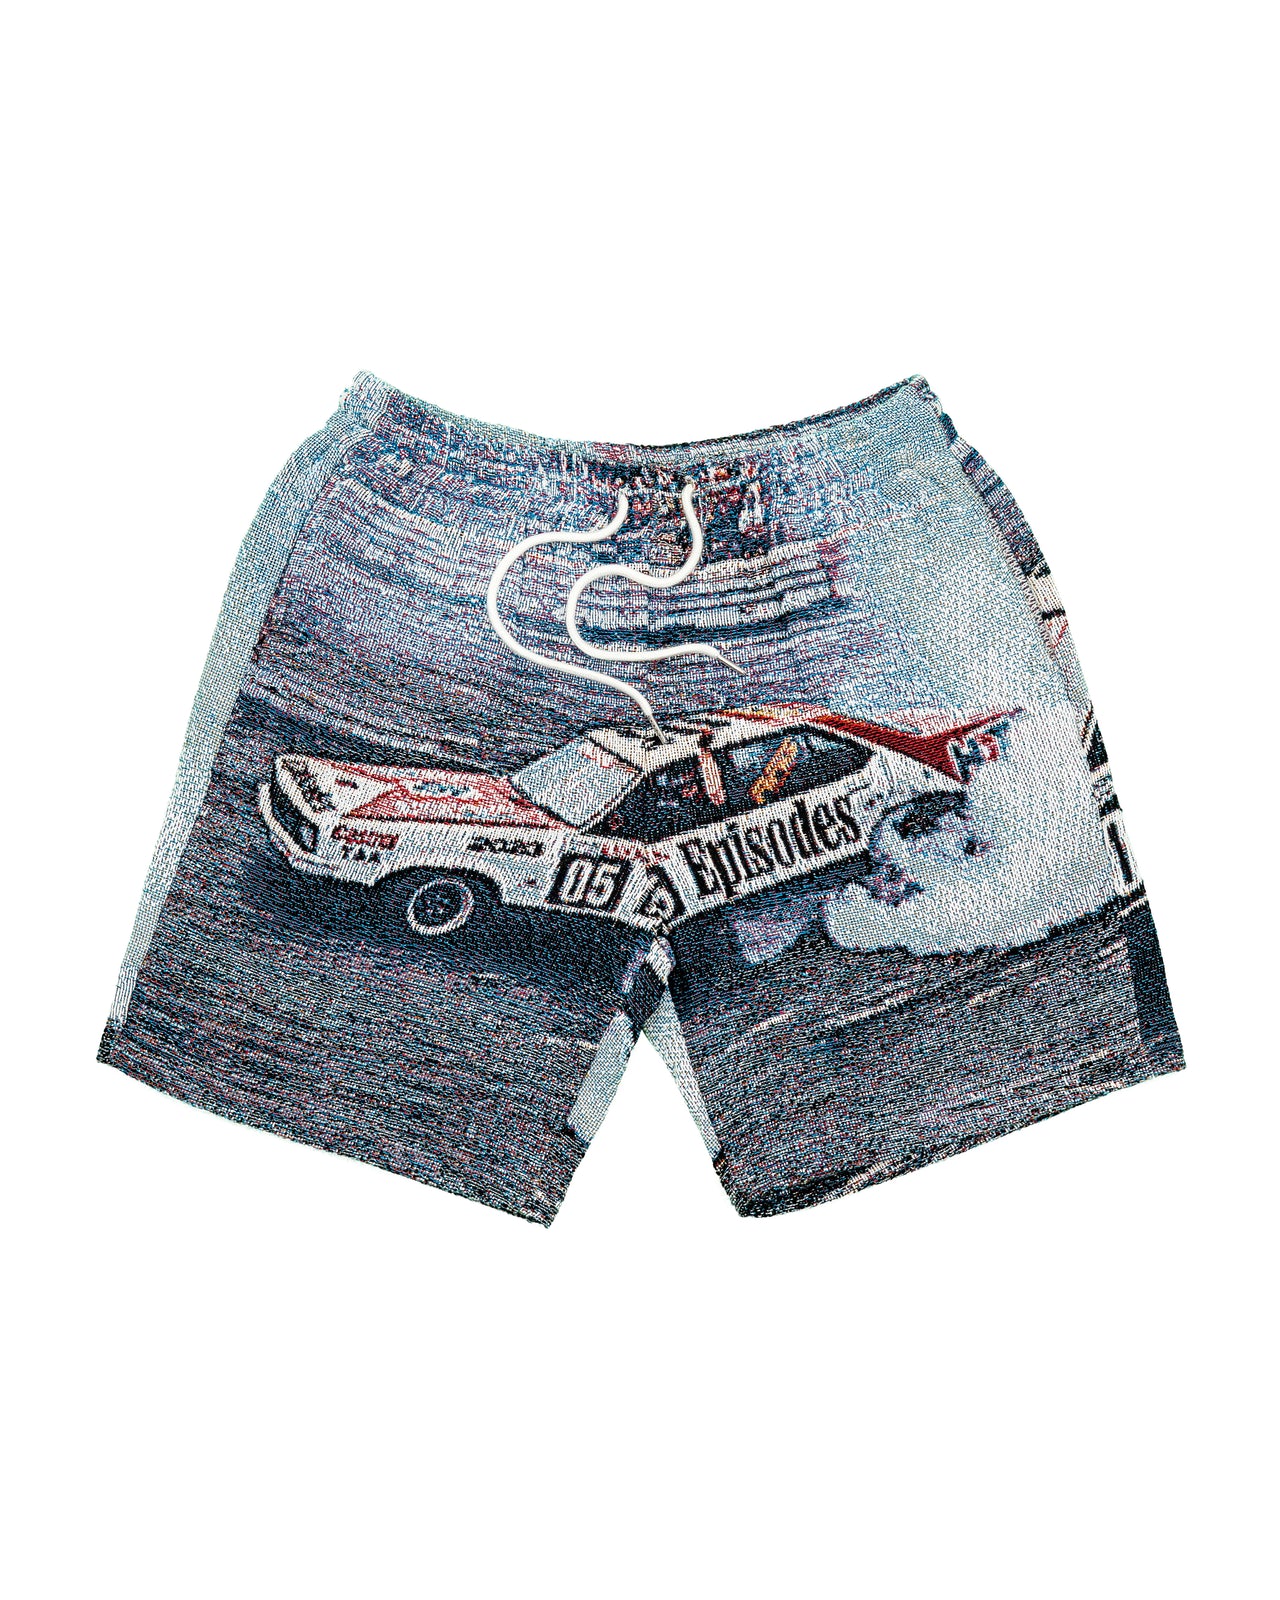 'Drift' Tapestry Shorts